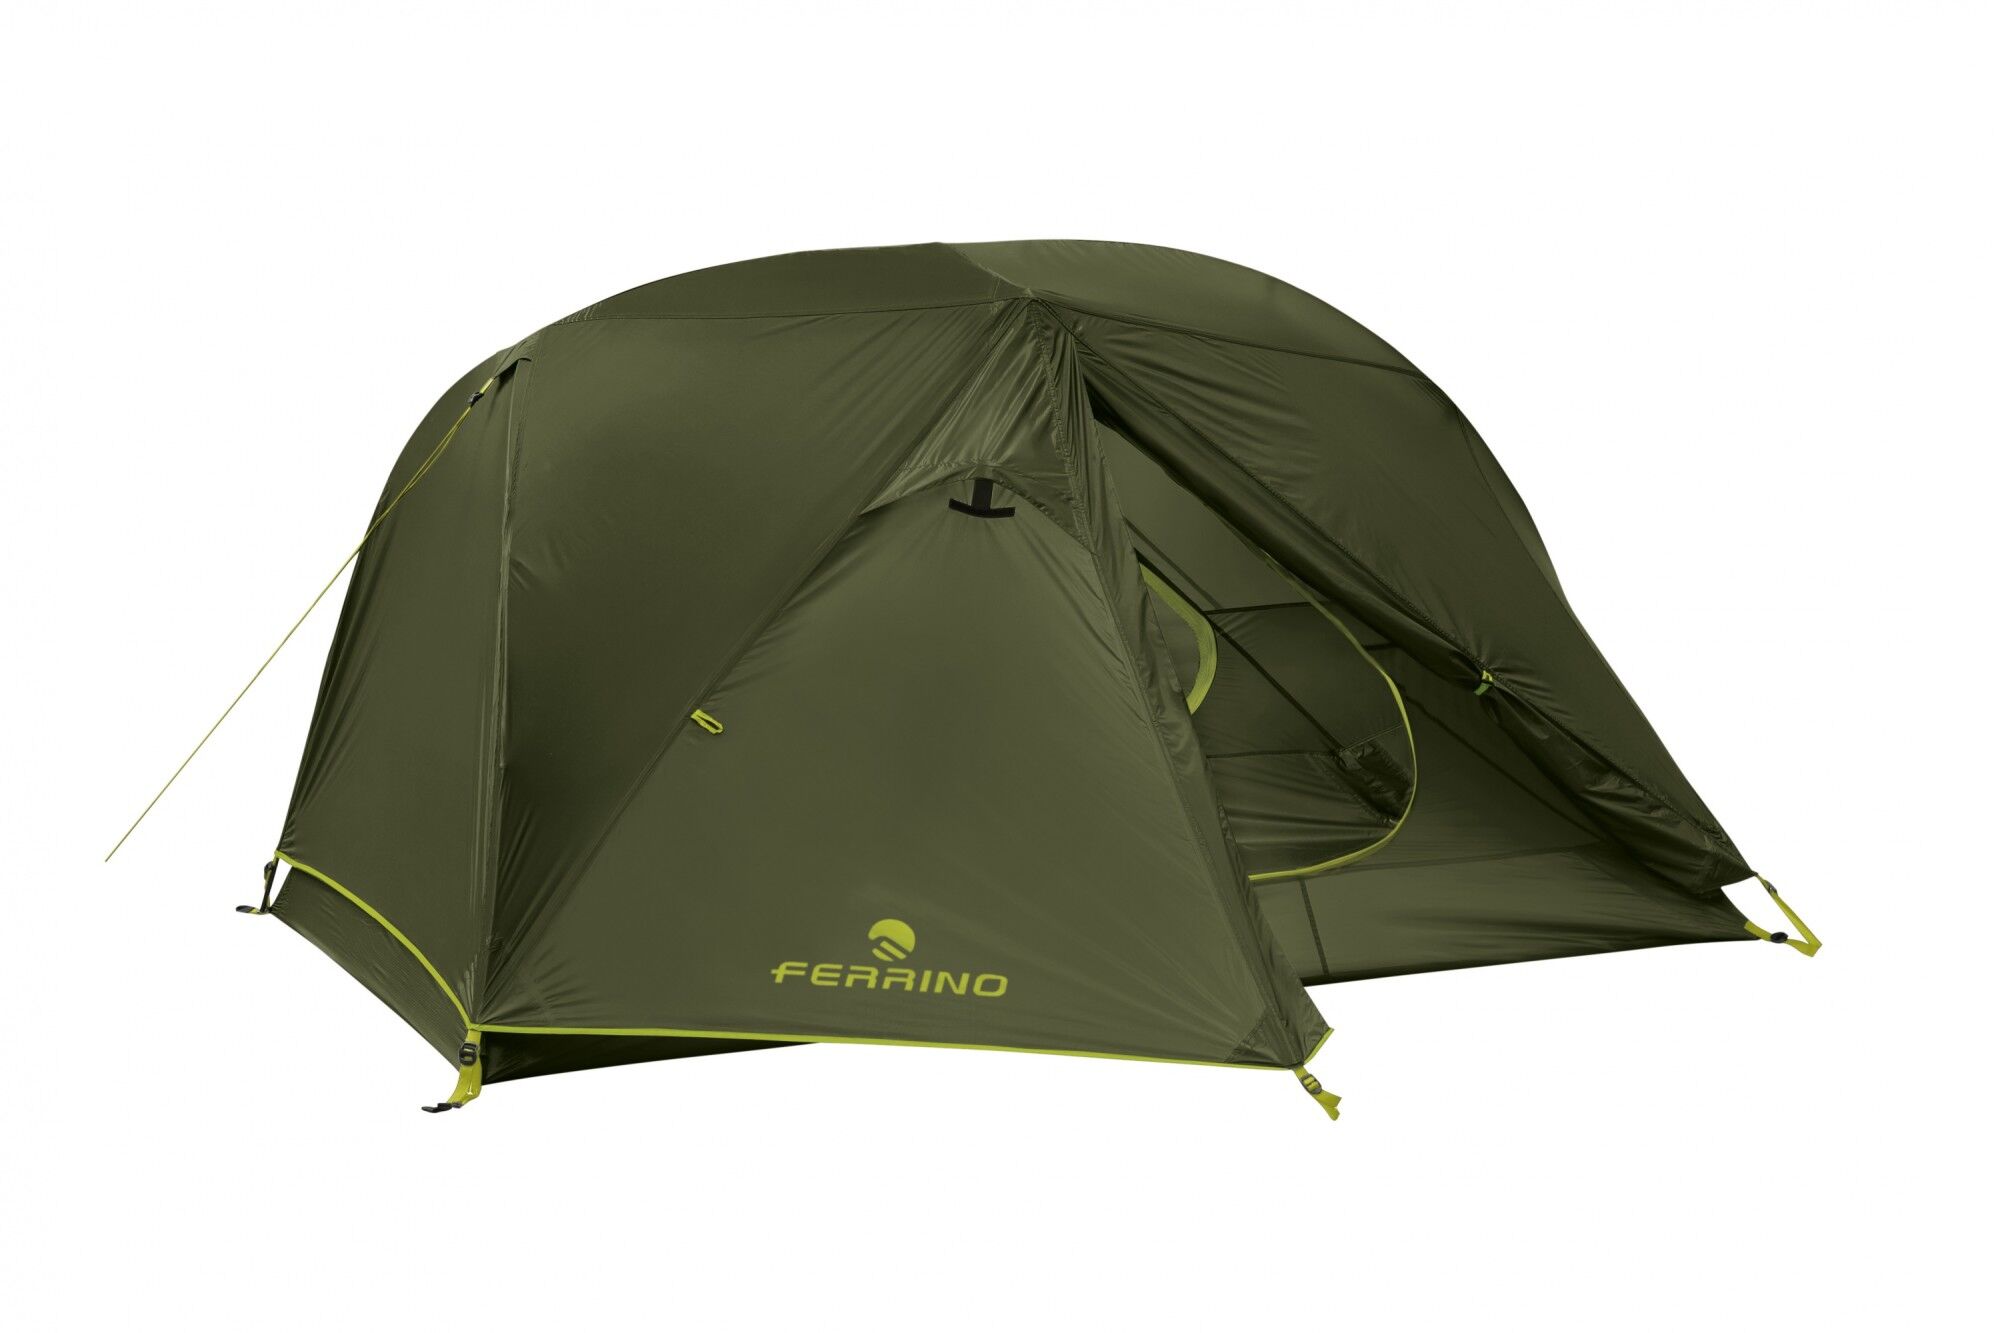 Ferrino - Atrax 2 - Tent